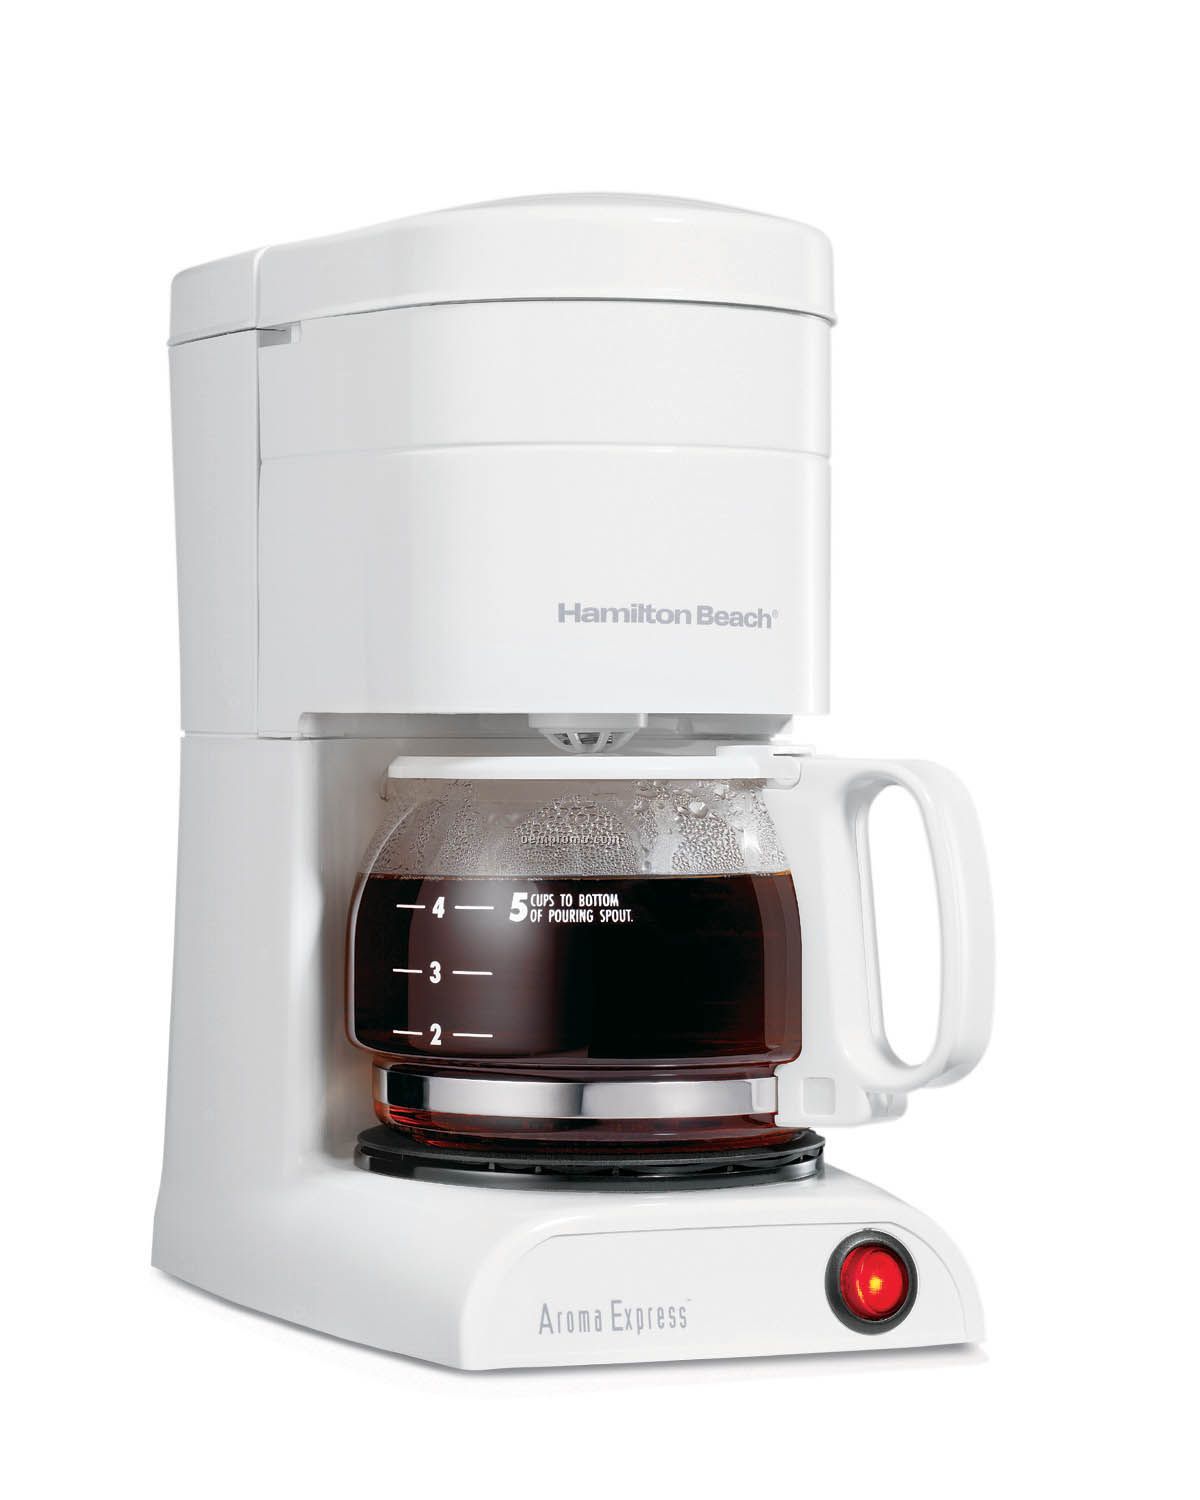 Hamilton Beach Express 5-cup Coffeemaker (White)